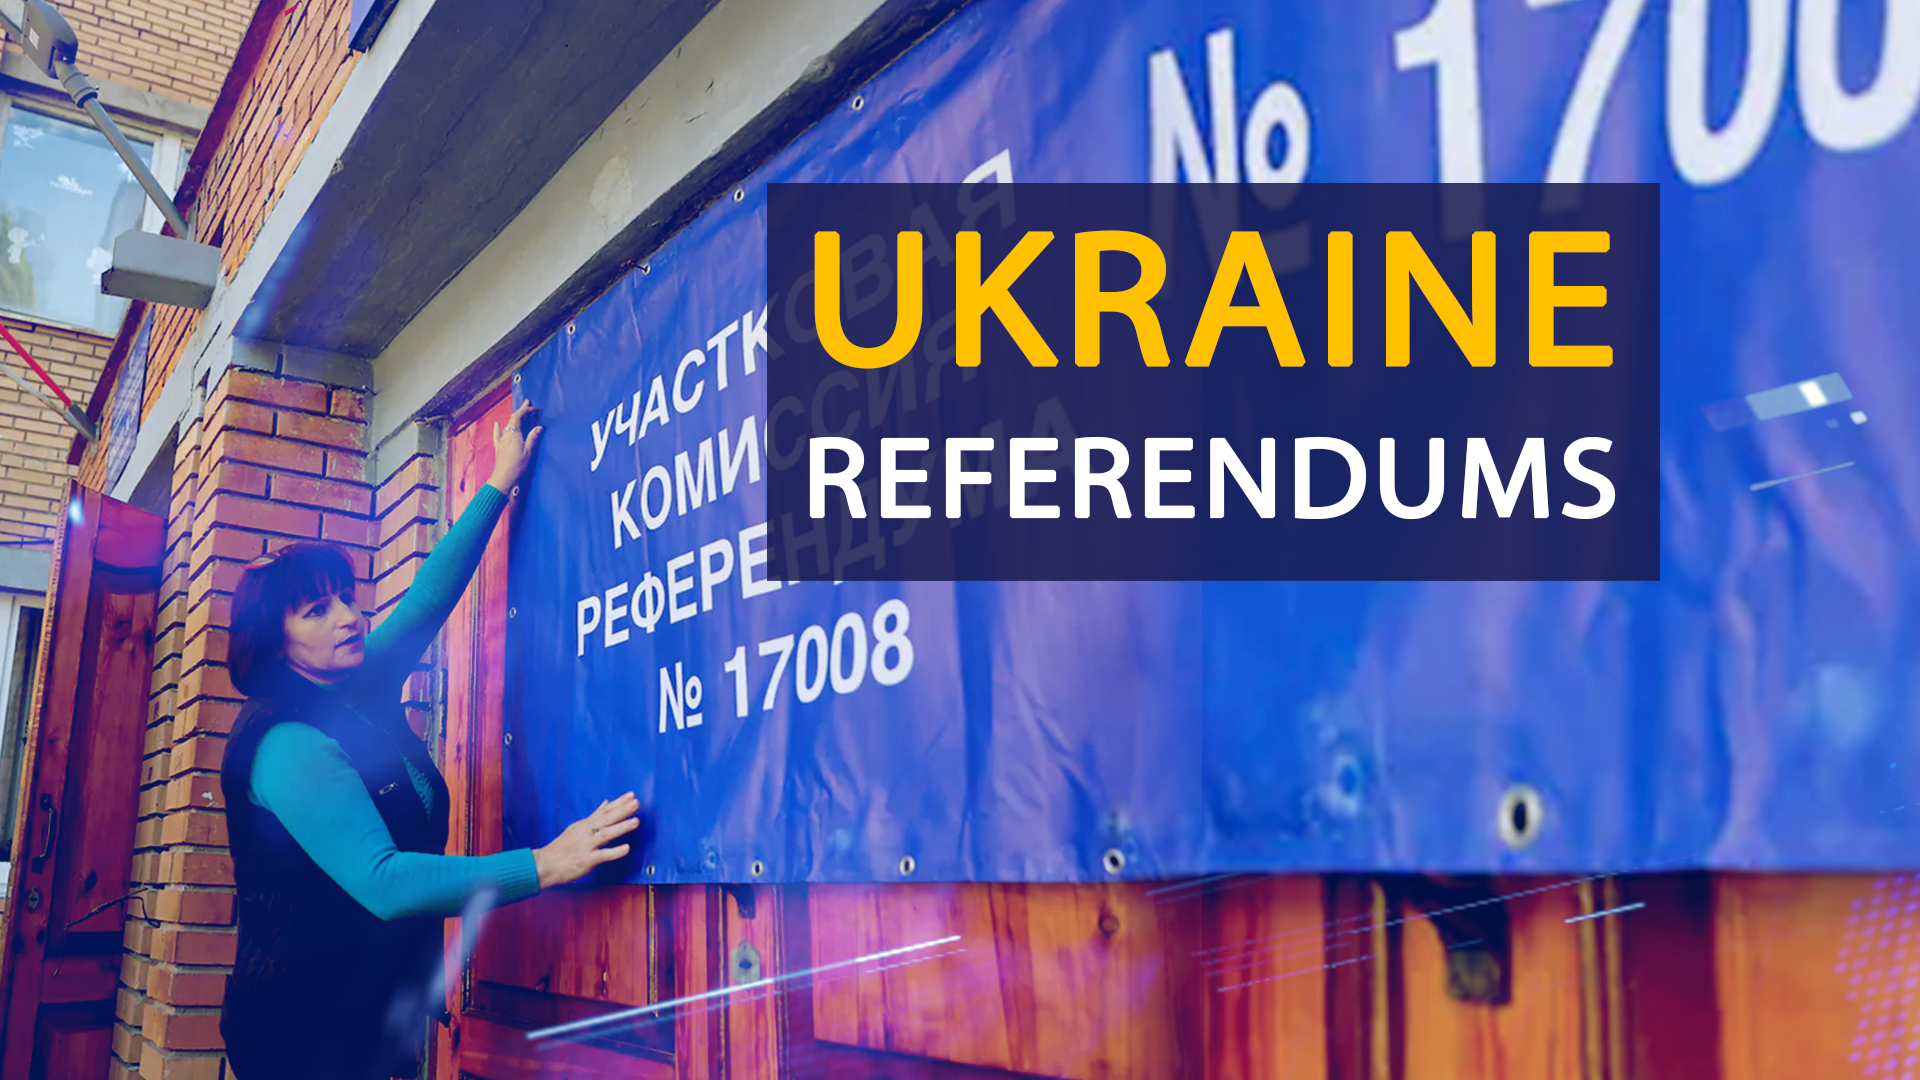 Ukraine referendums